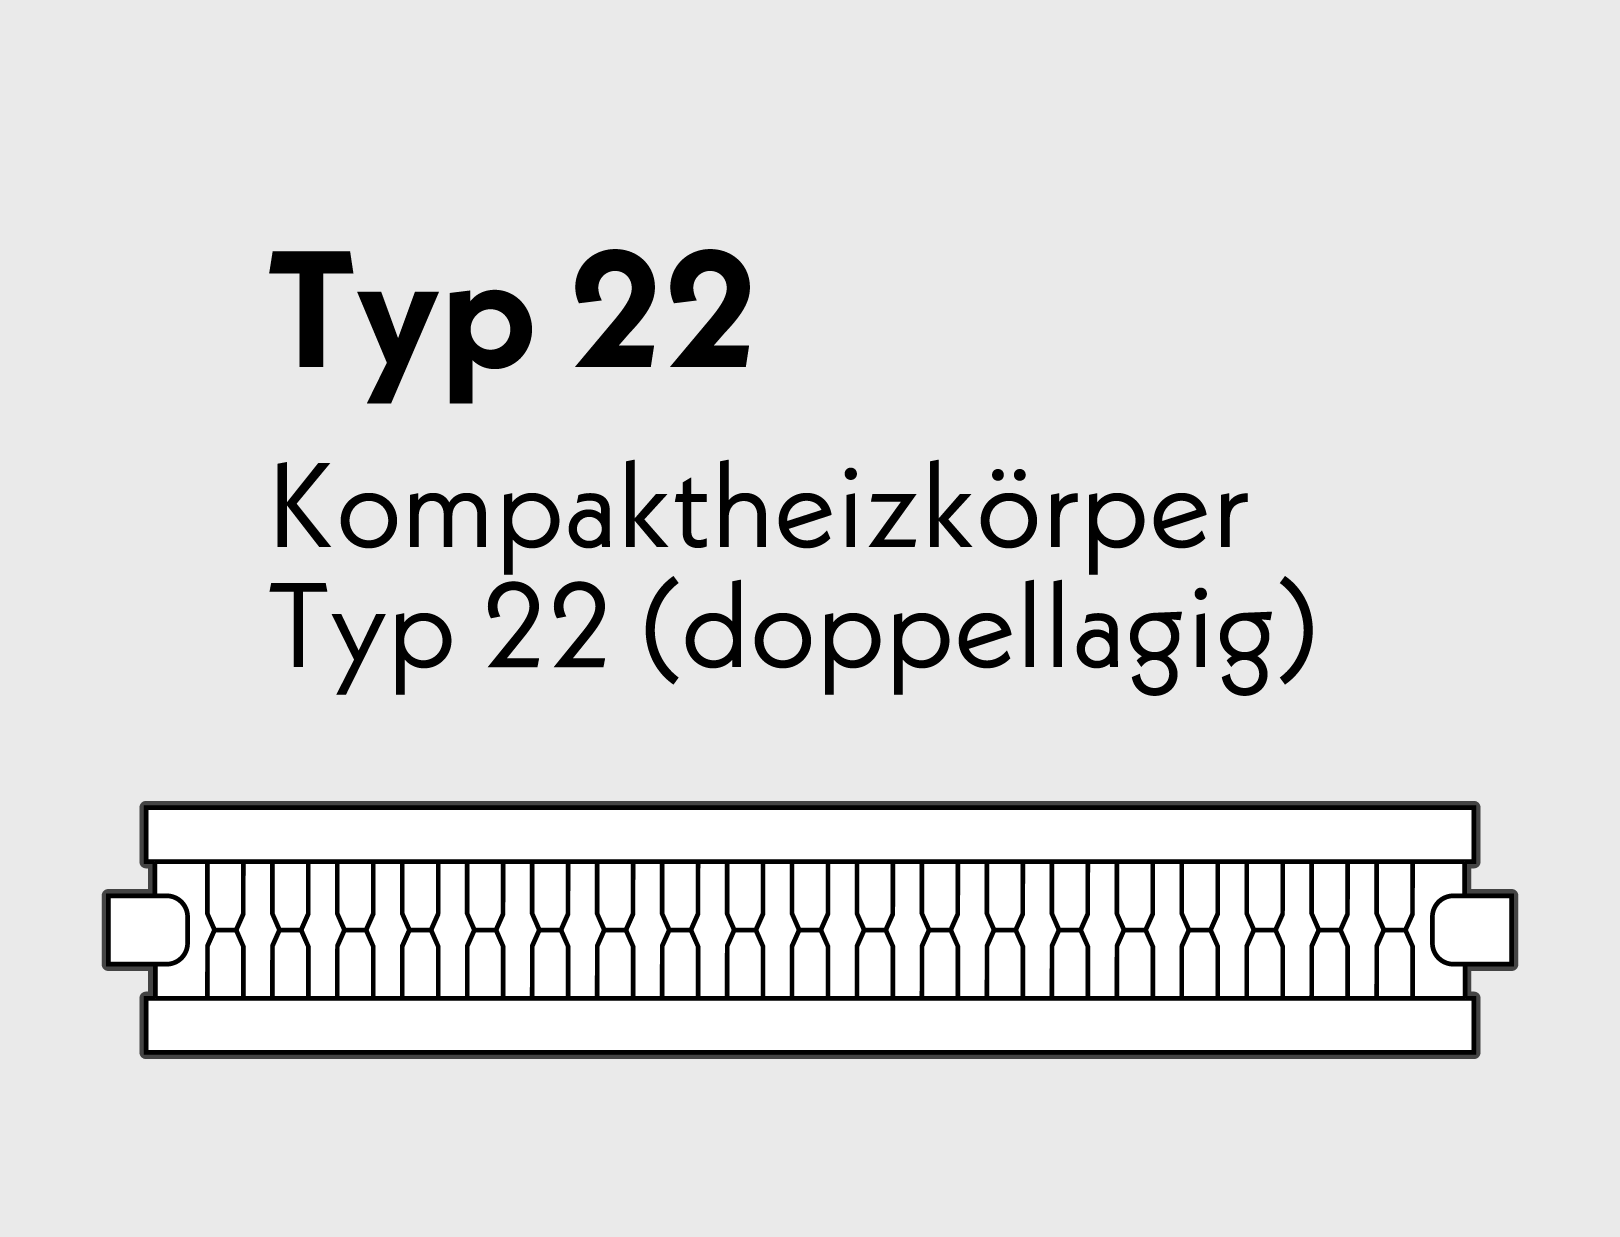 Kompaktheizkörper Typ 22 (doppellagig)